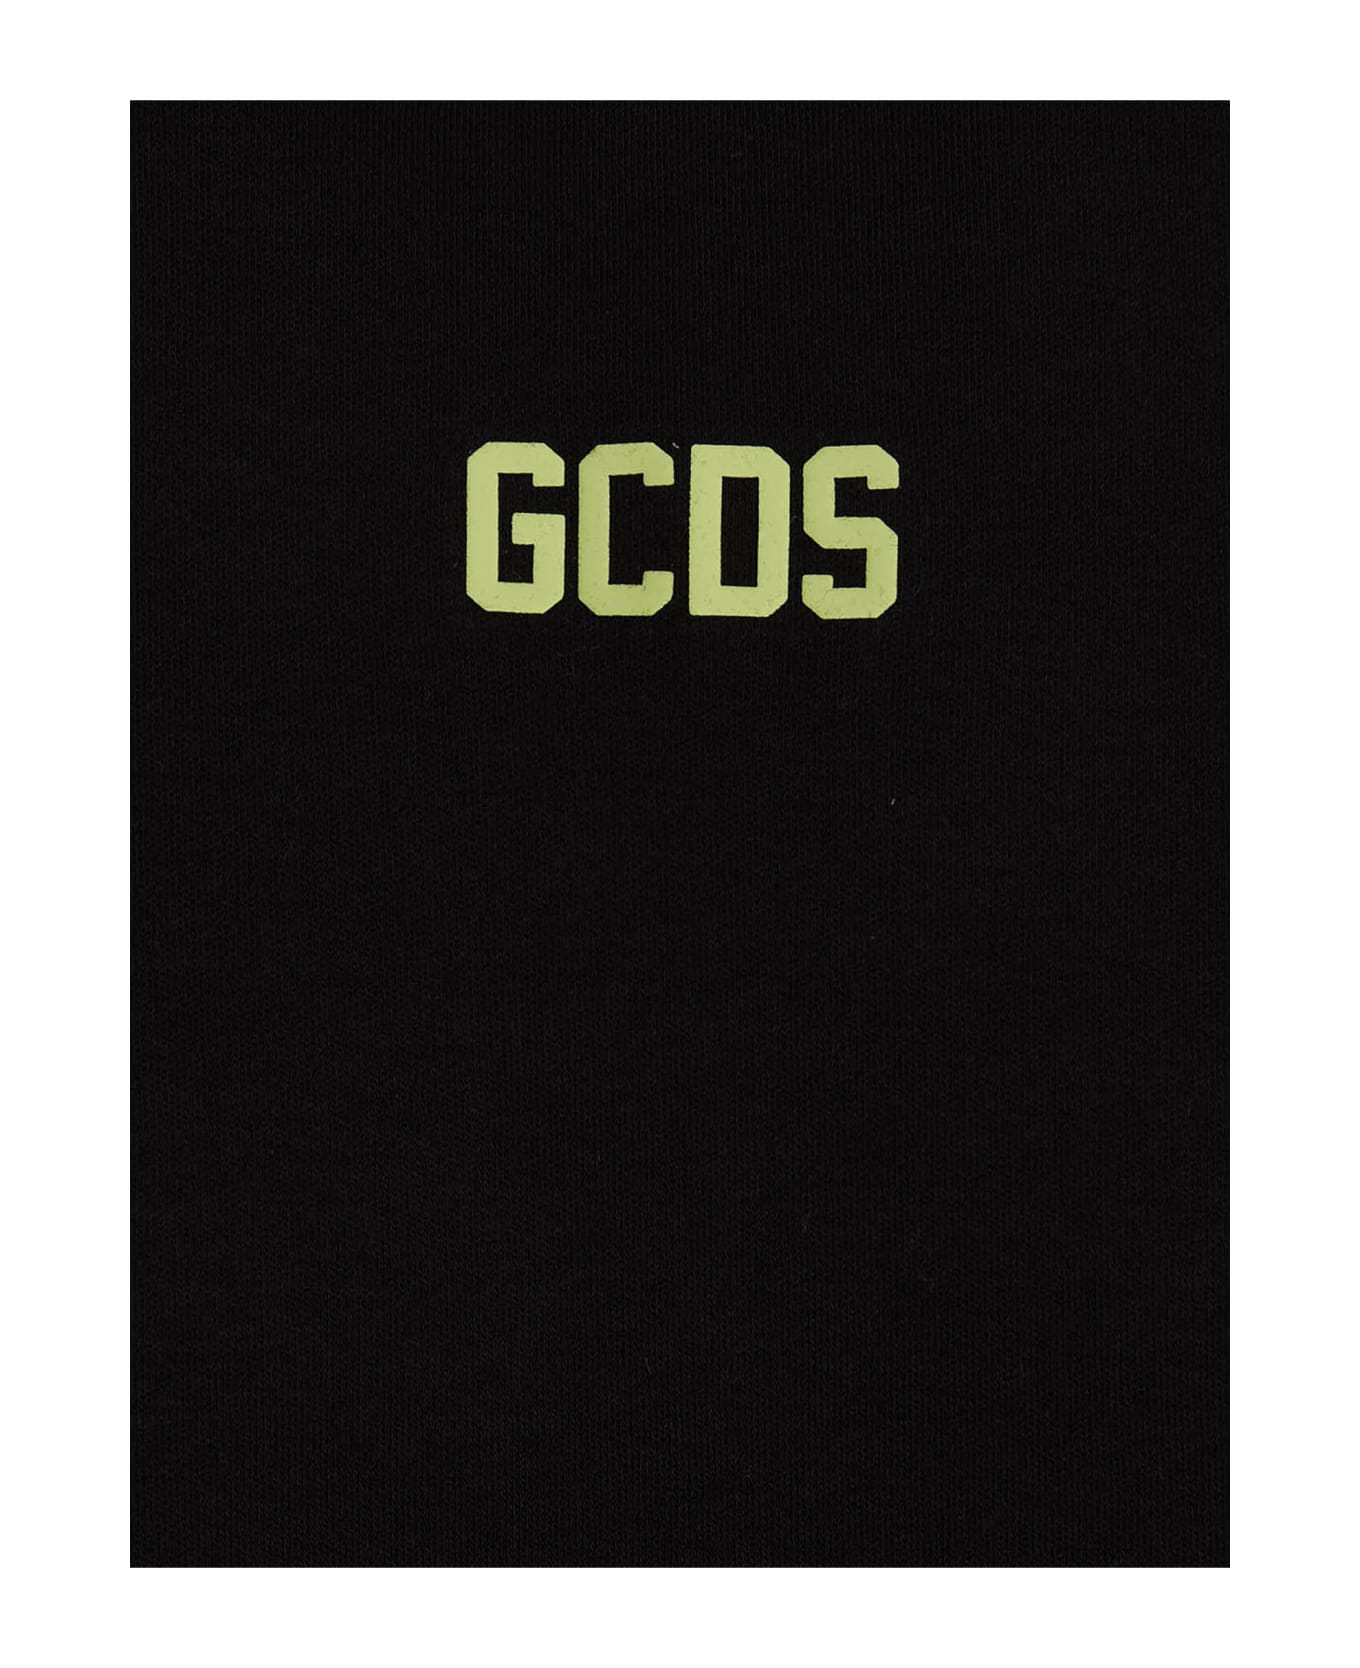 GCDS Logo T-shirt - Black  